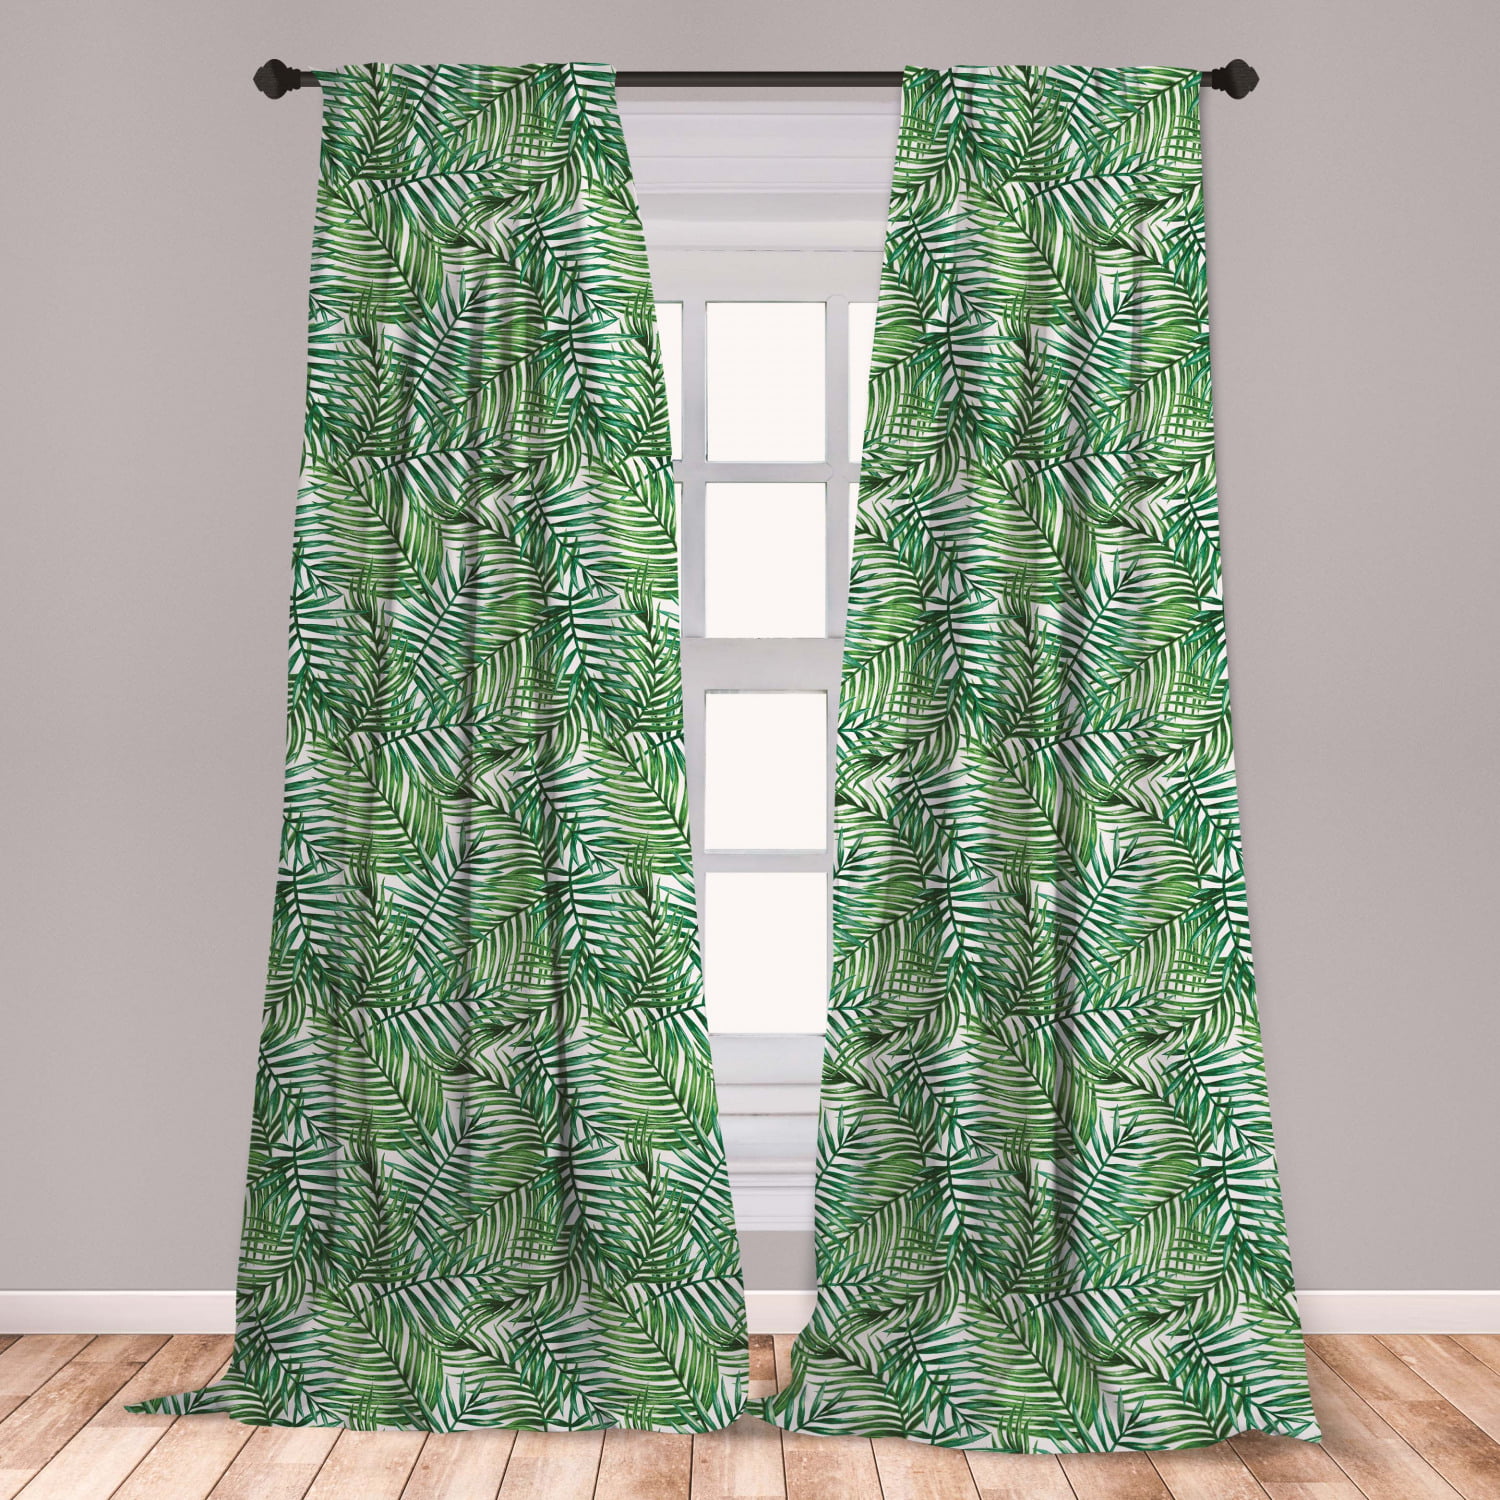 Tree print curtains